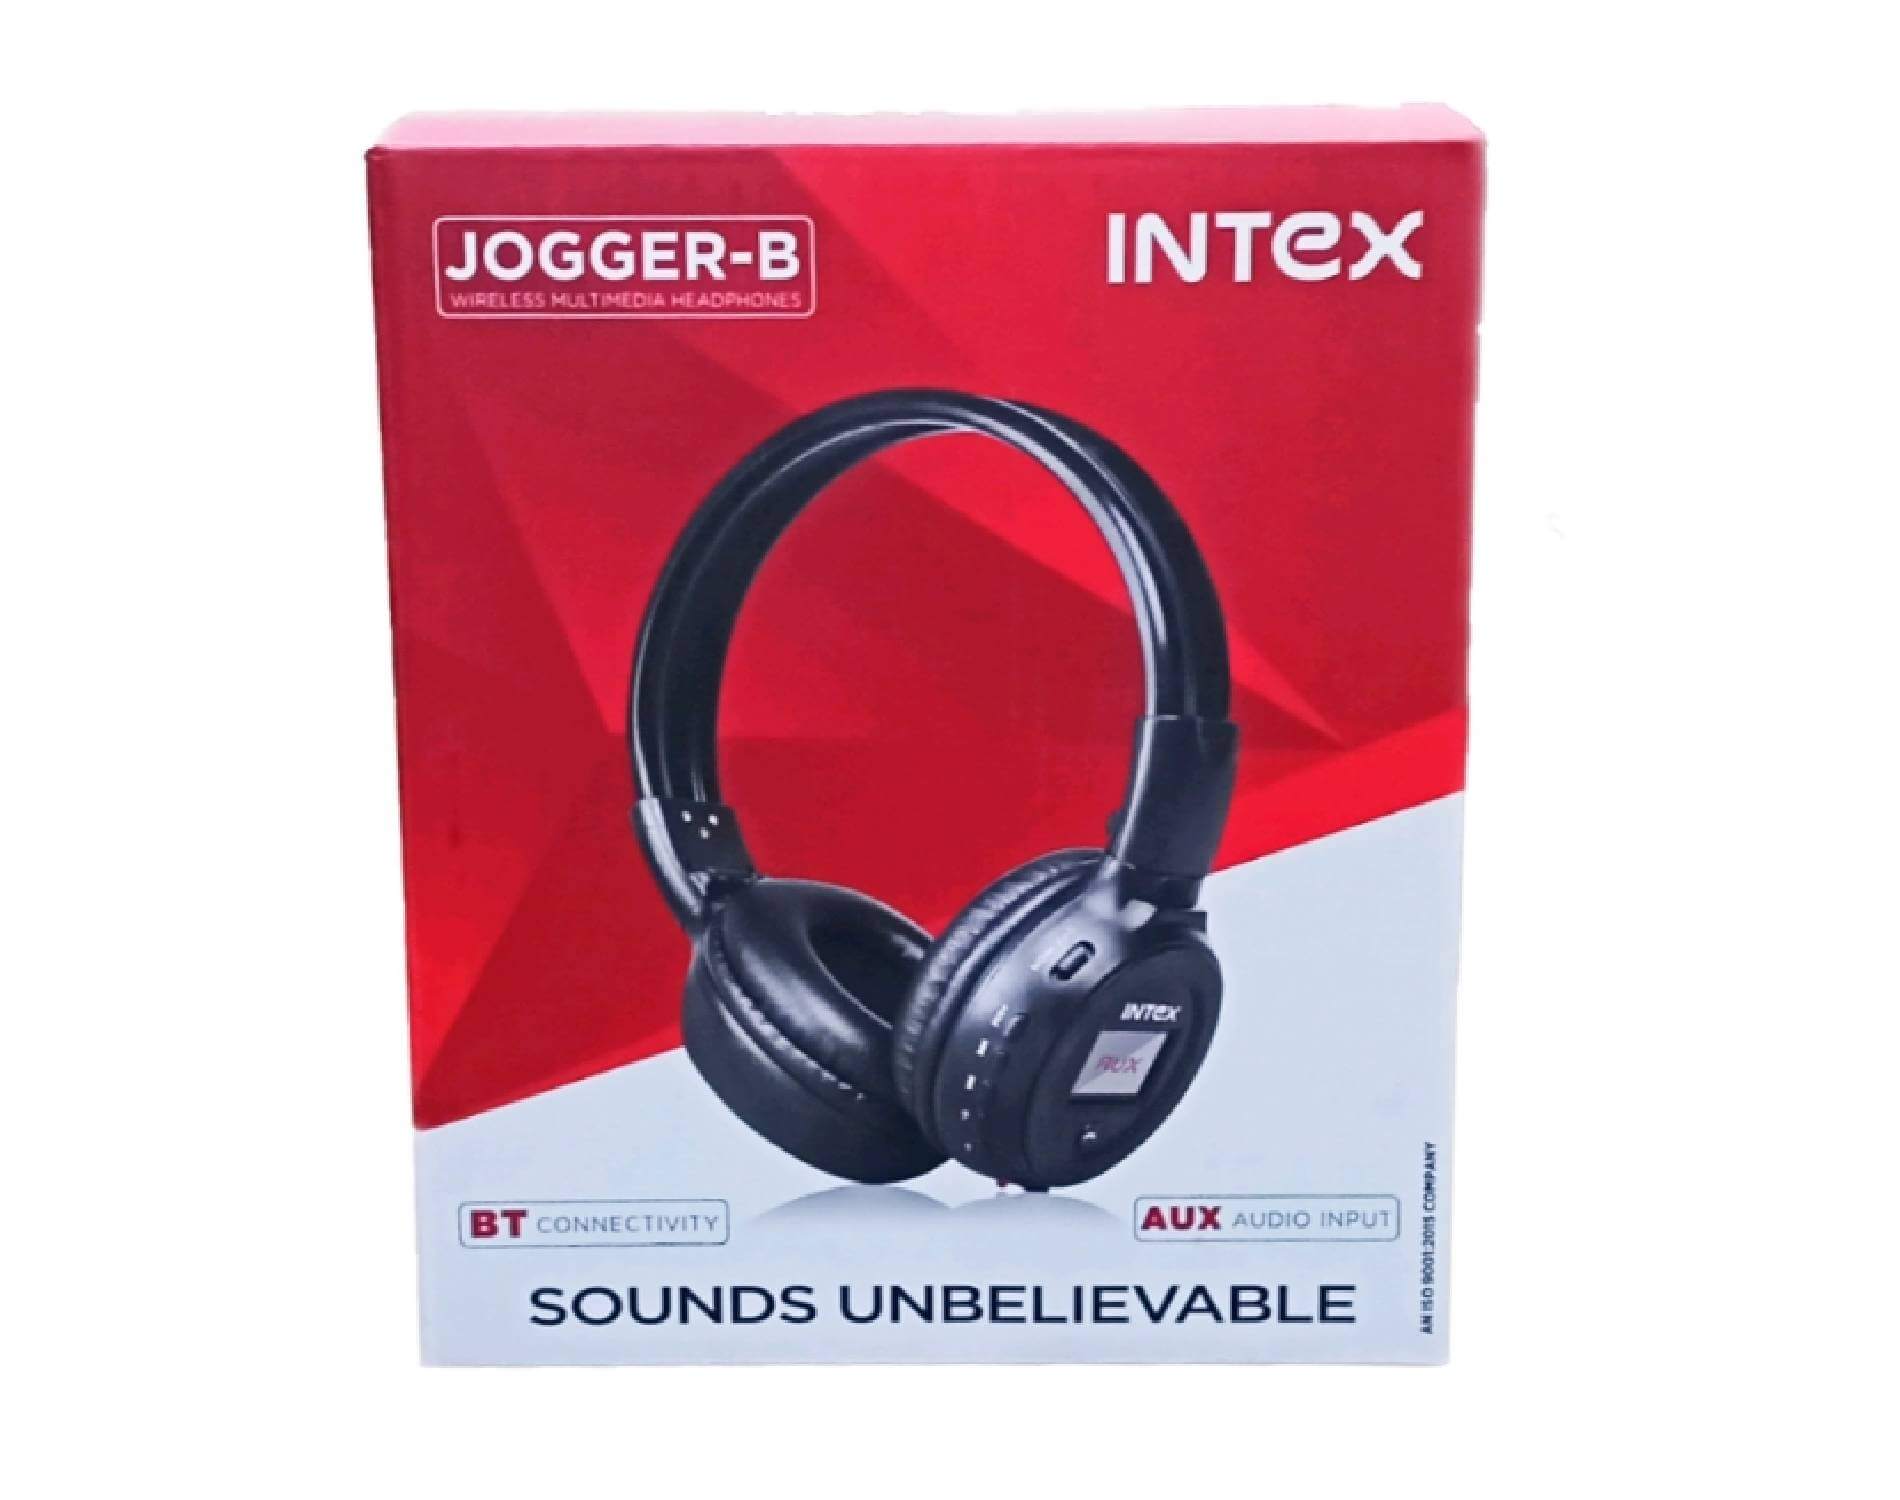 intex jogger b bluetooth headphone